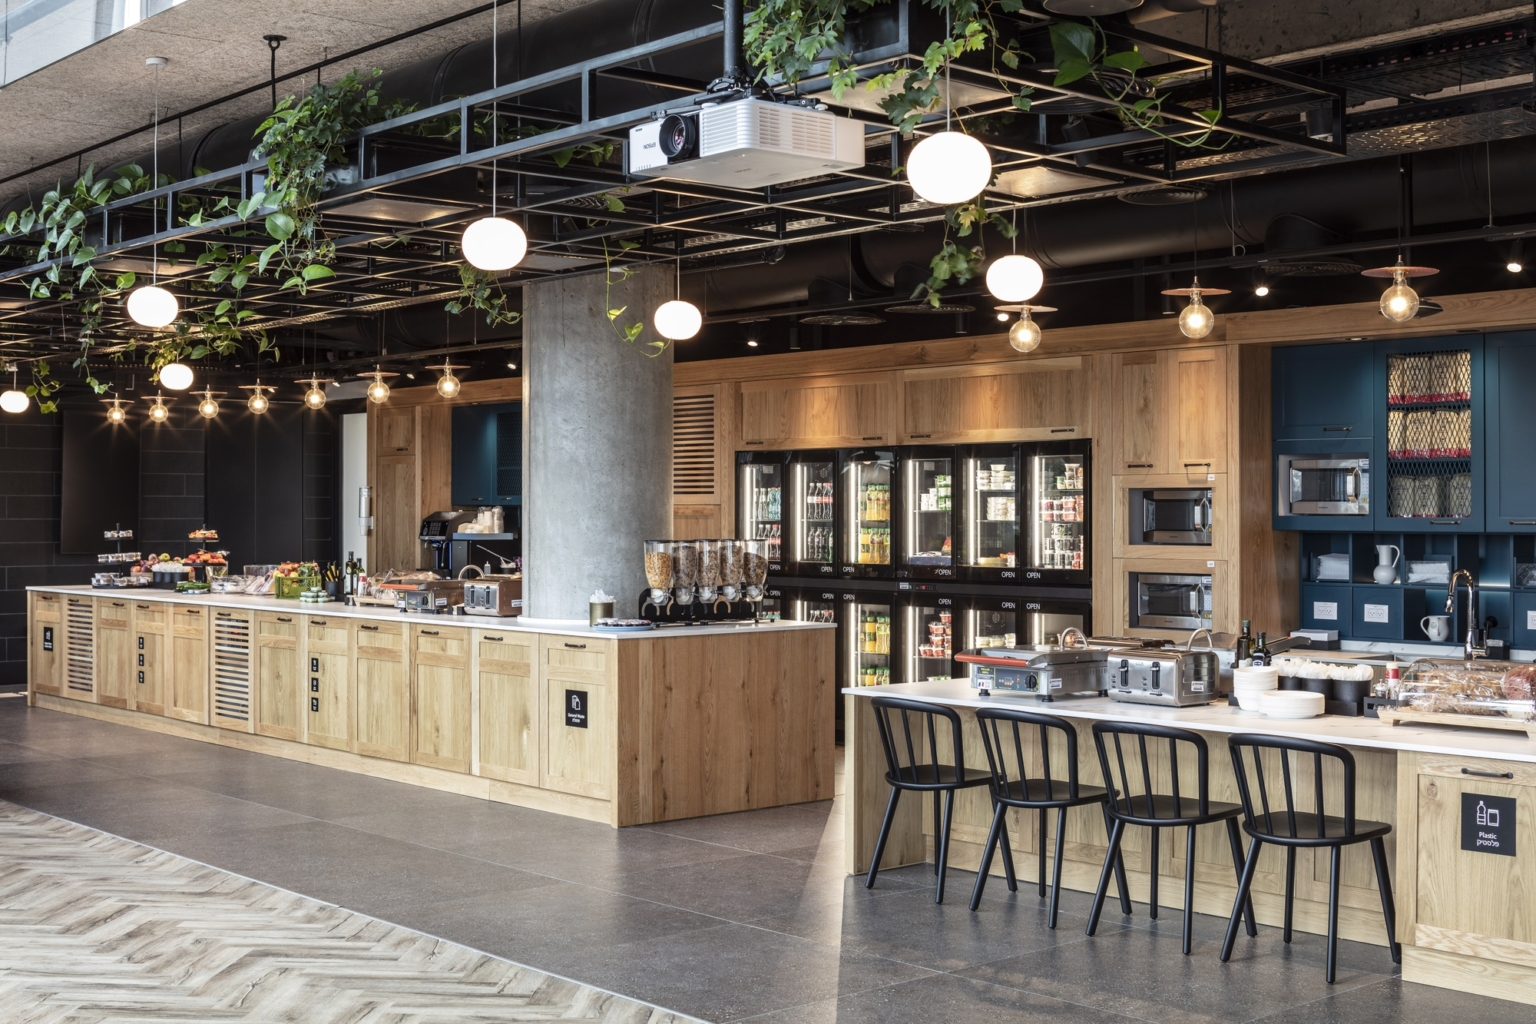 Microsoft(マイクロソフト)のオフィス - イスラエル, ヘルツリーヤのカフェ/レストランスペース